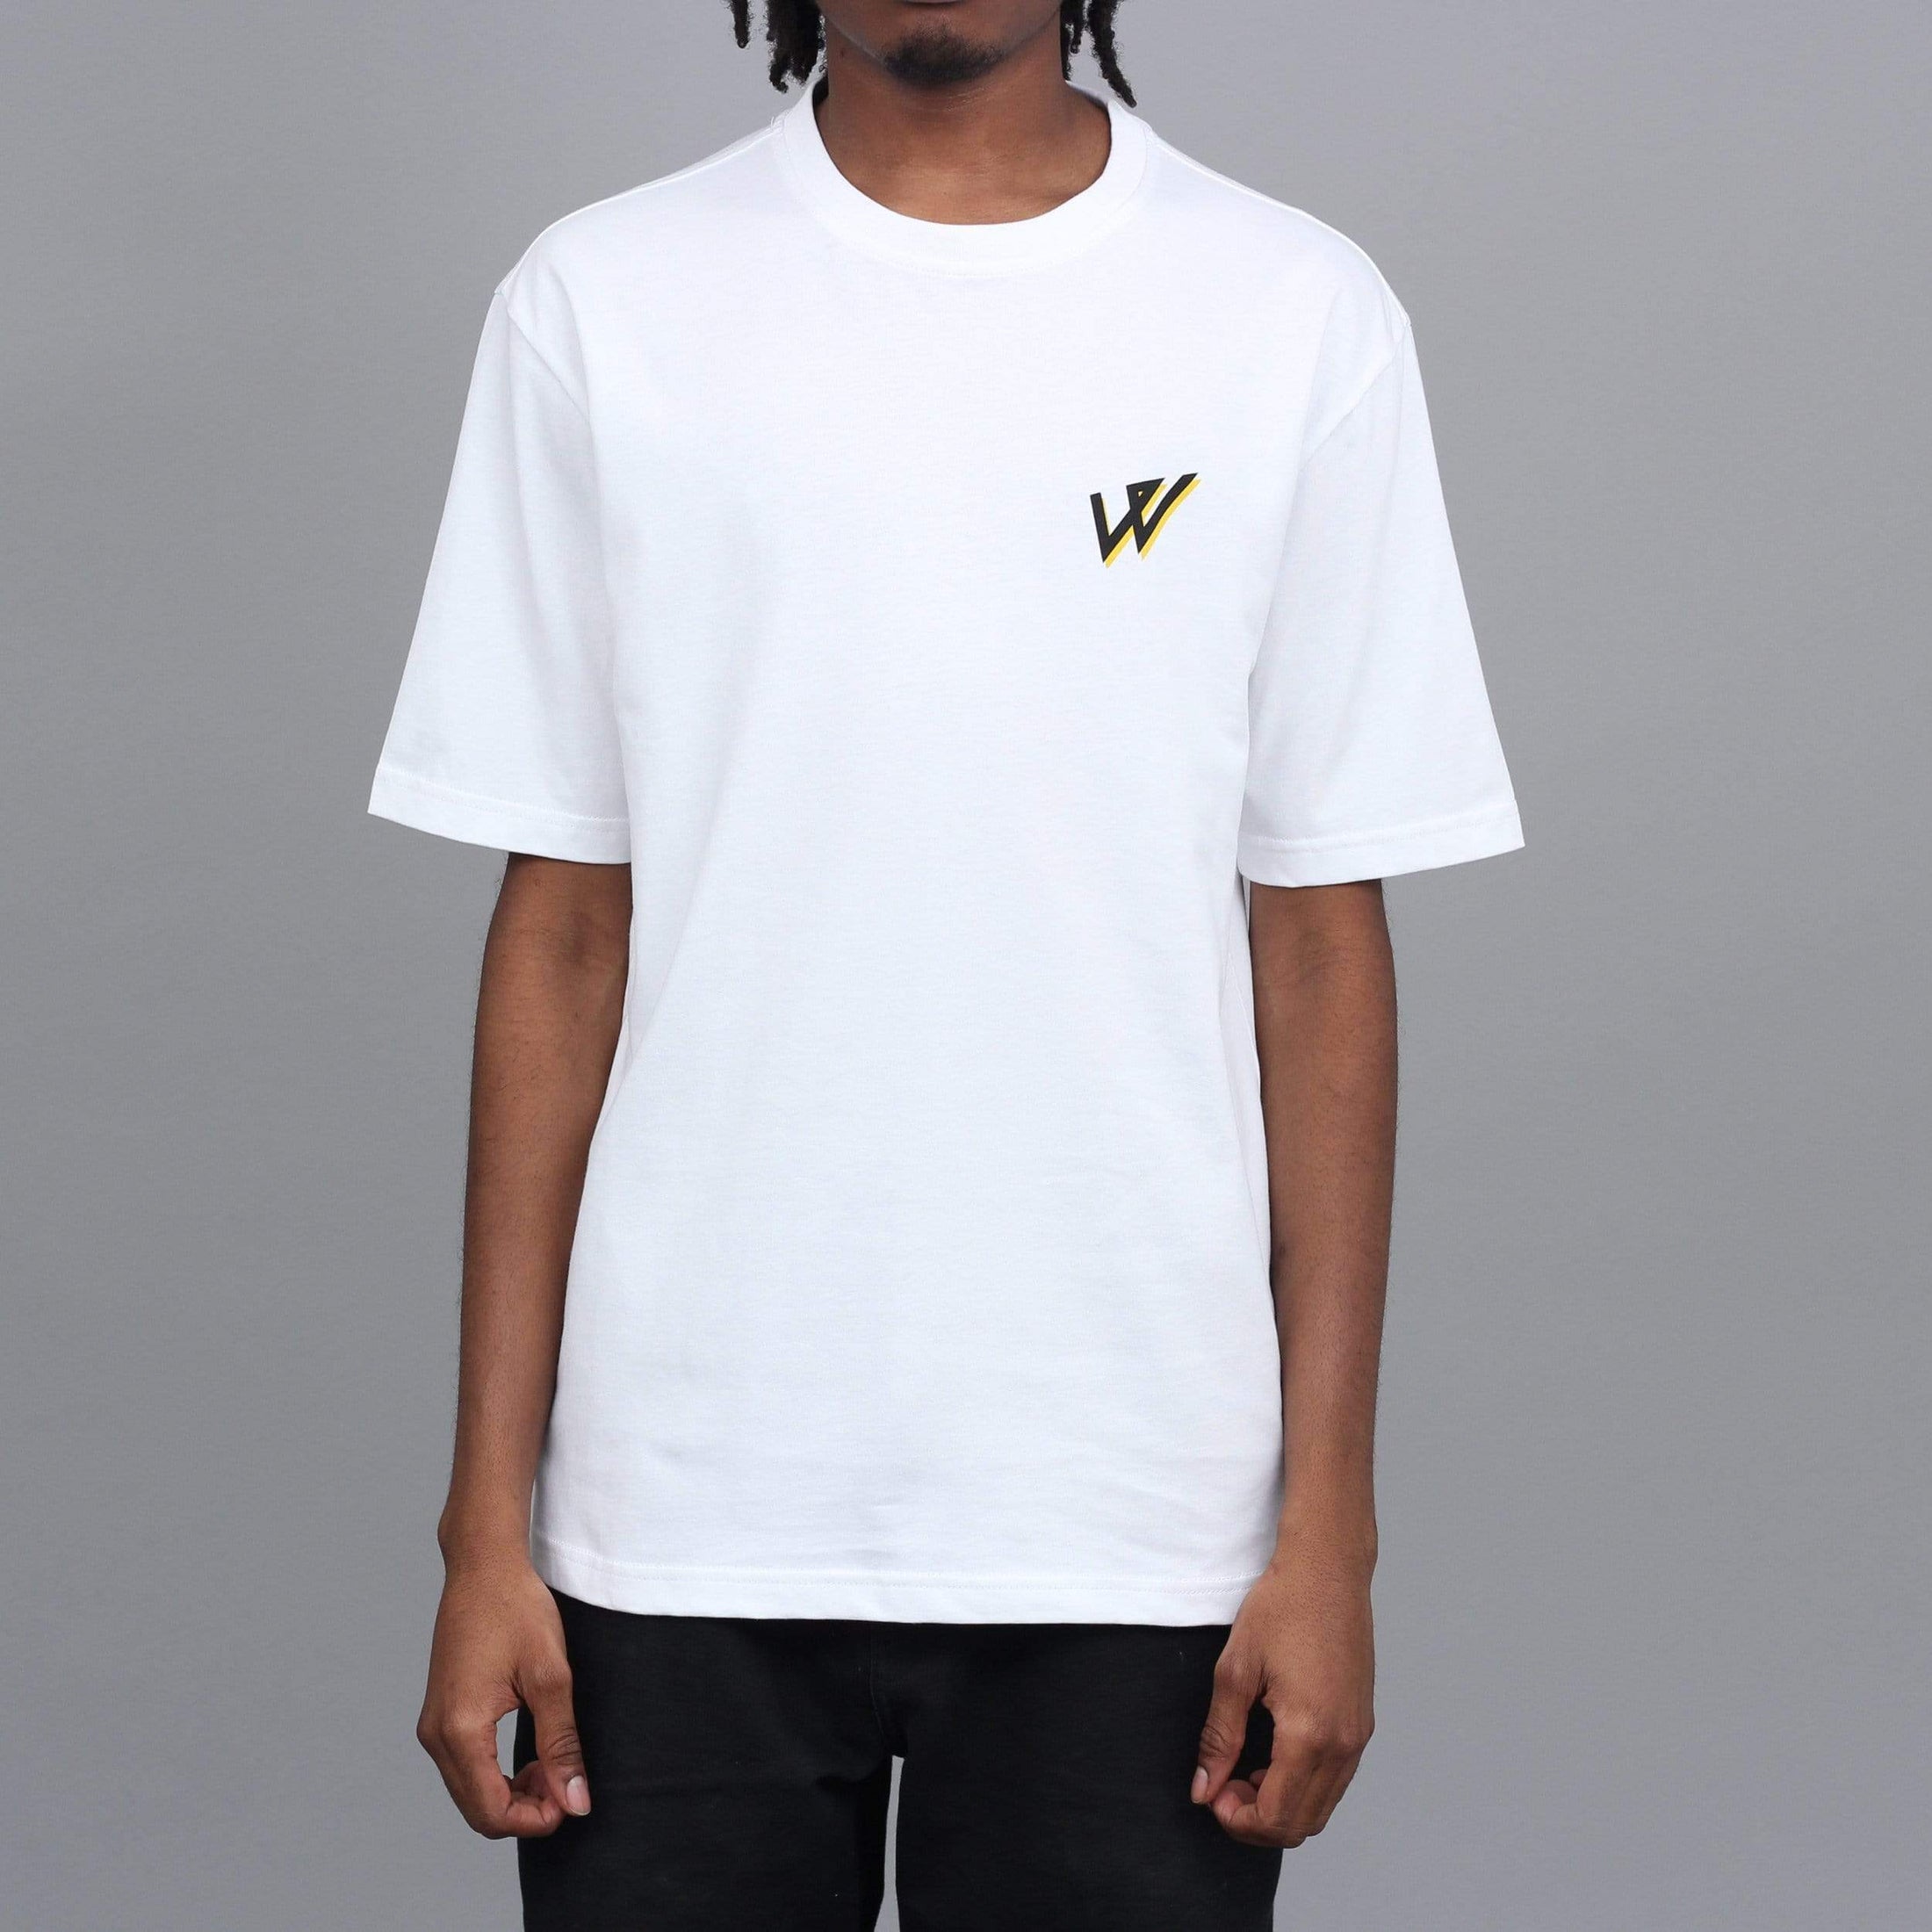 Wayward Ciggies T-Shirt White